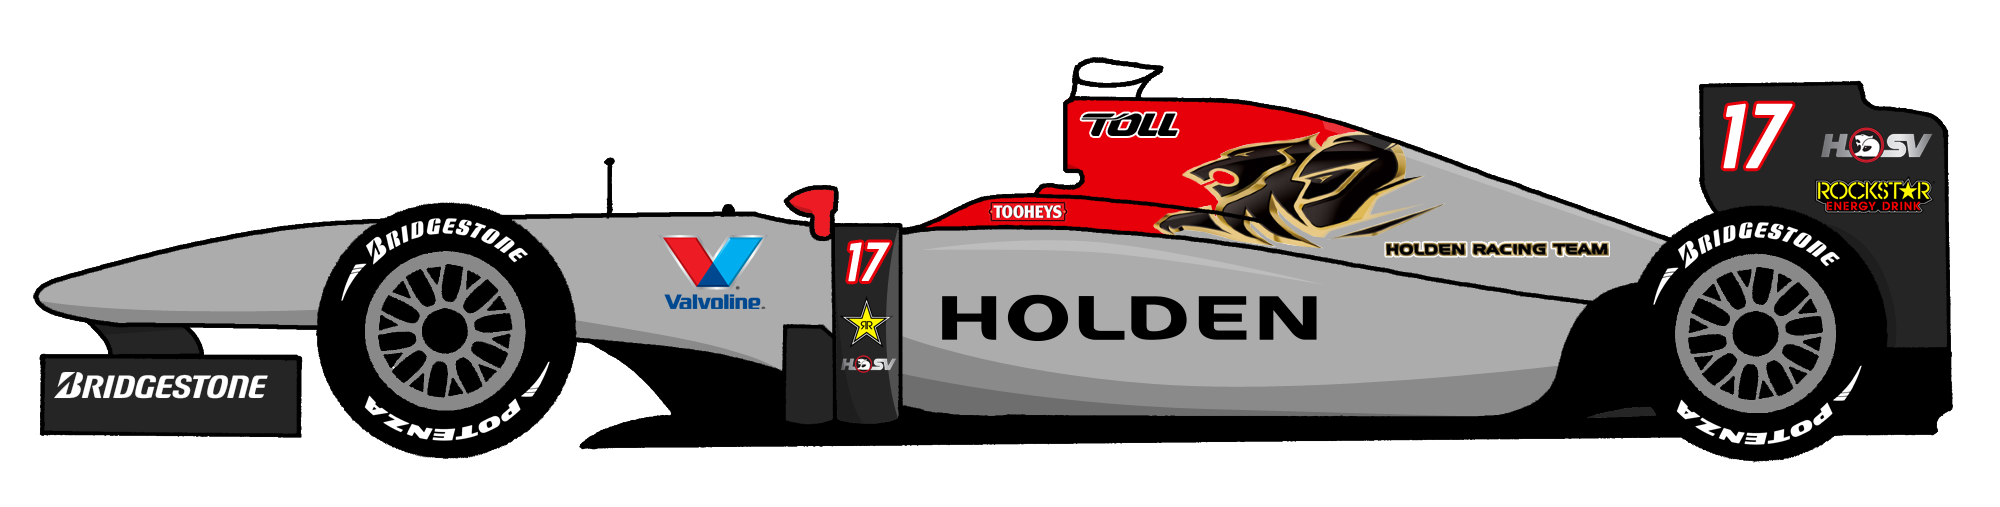 Valvoline Holden Racing Team